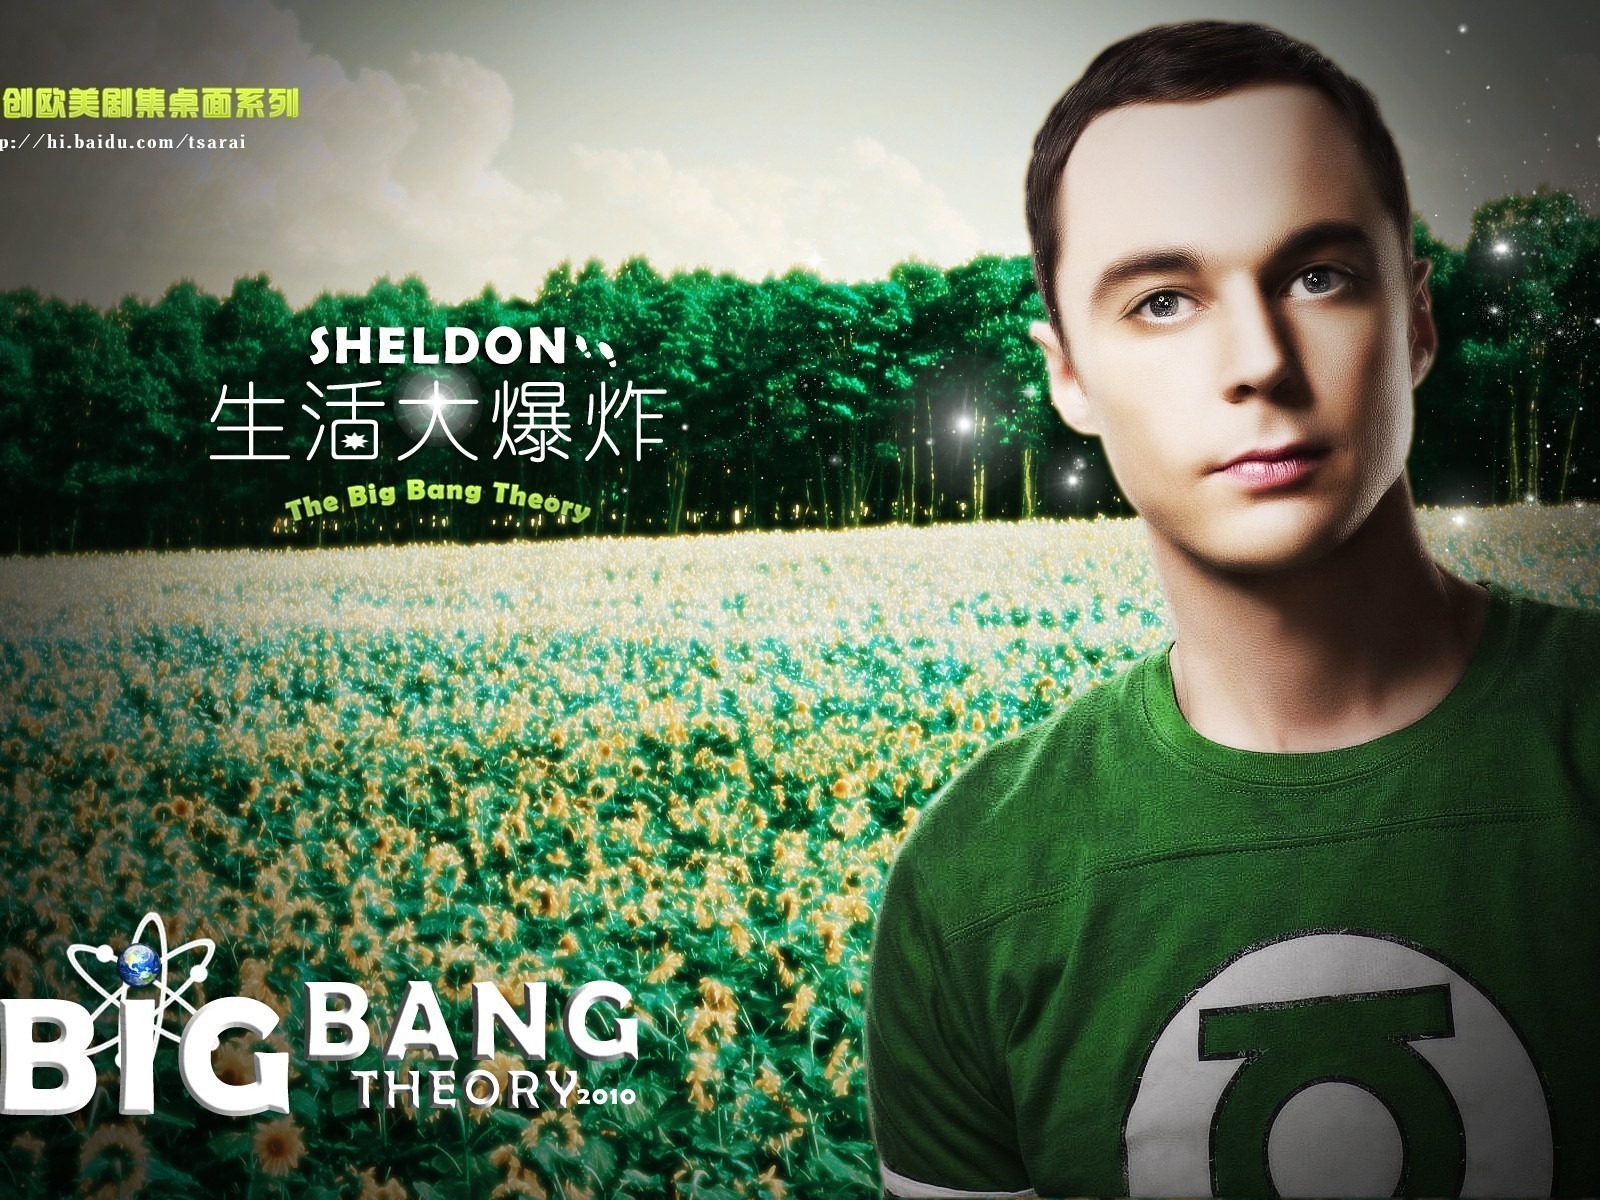 The Big Bang Theory ビッグバン理論TVシリーズHDの壁紙 #16 - 1600x1200